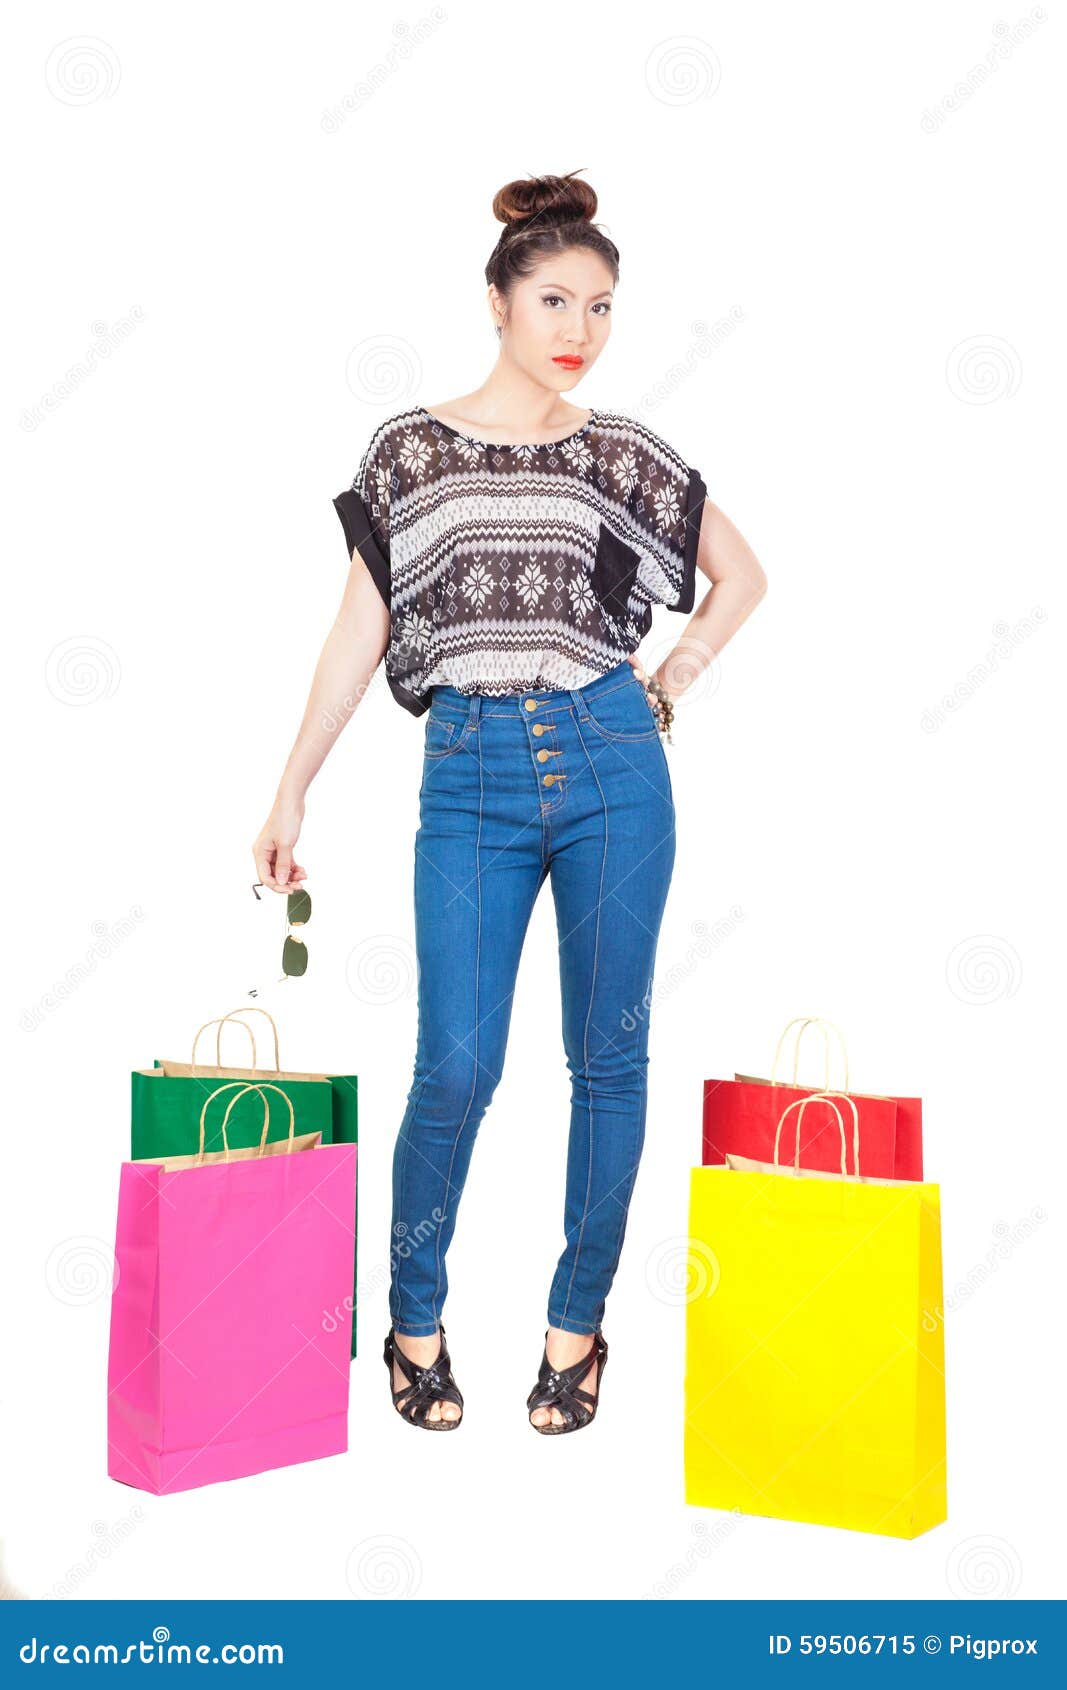 woman shopping fasion the white backboard.